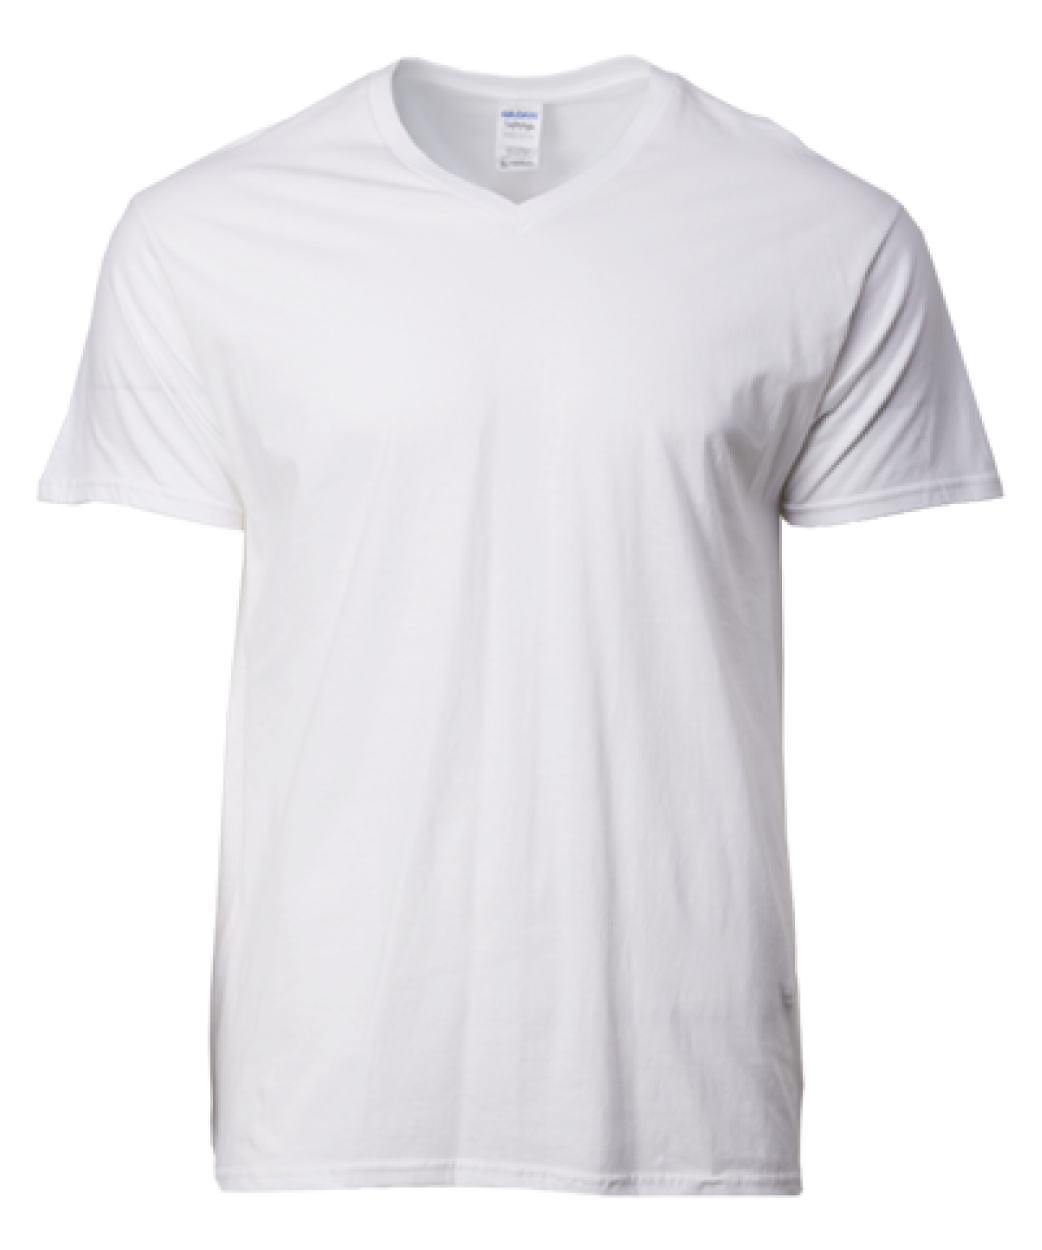 GILDAN Softstyle 63V00 150GSM Cotton Unisex V-Neck T-Shirt Best Men Women Adult Plain Cotton Soft T-Shirt Solid Tee WHITE/BLACK/NAVY/SPORT GREY/CHARCOAL 63V00